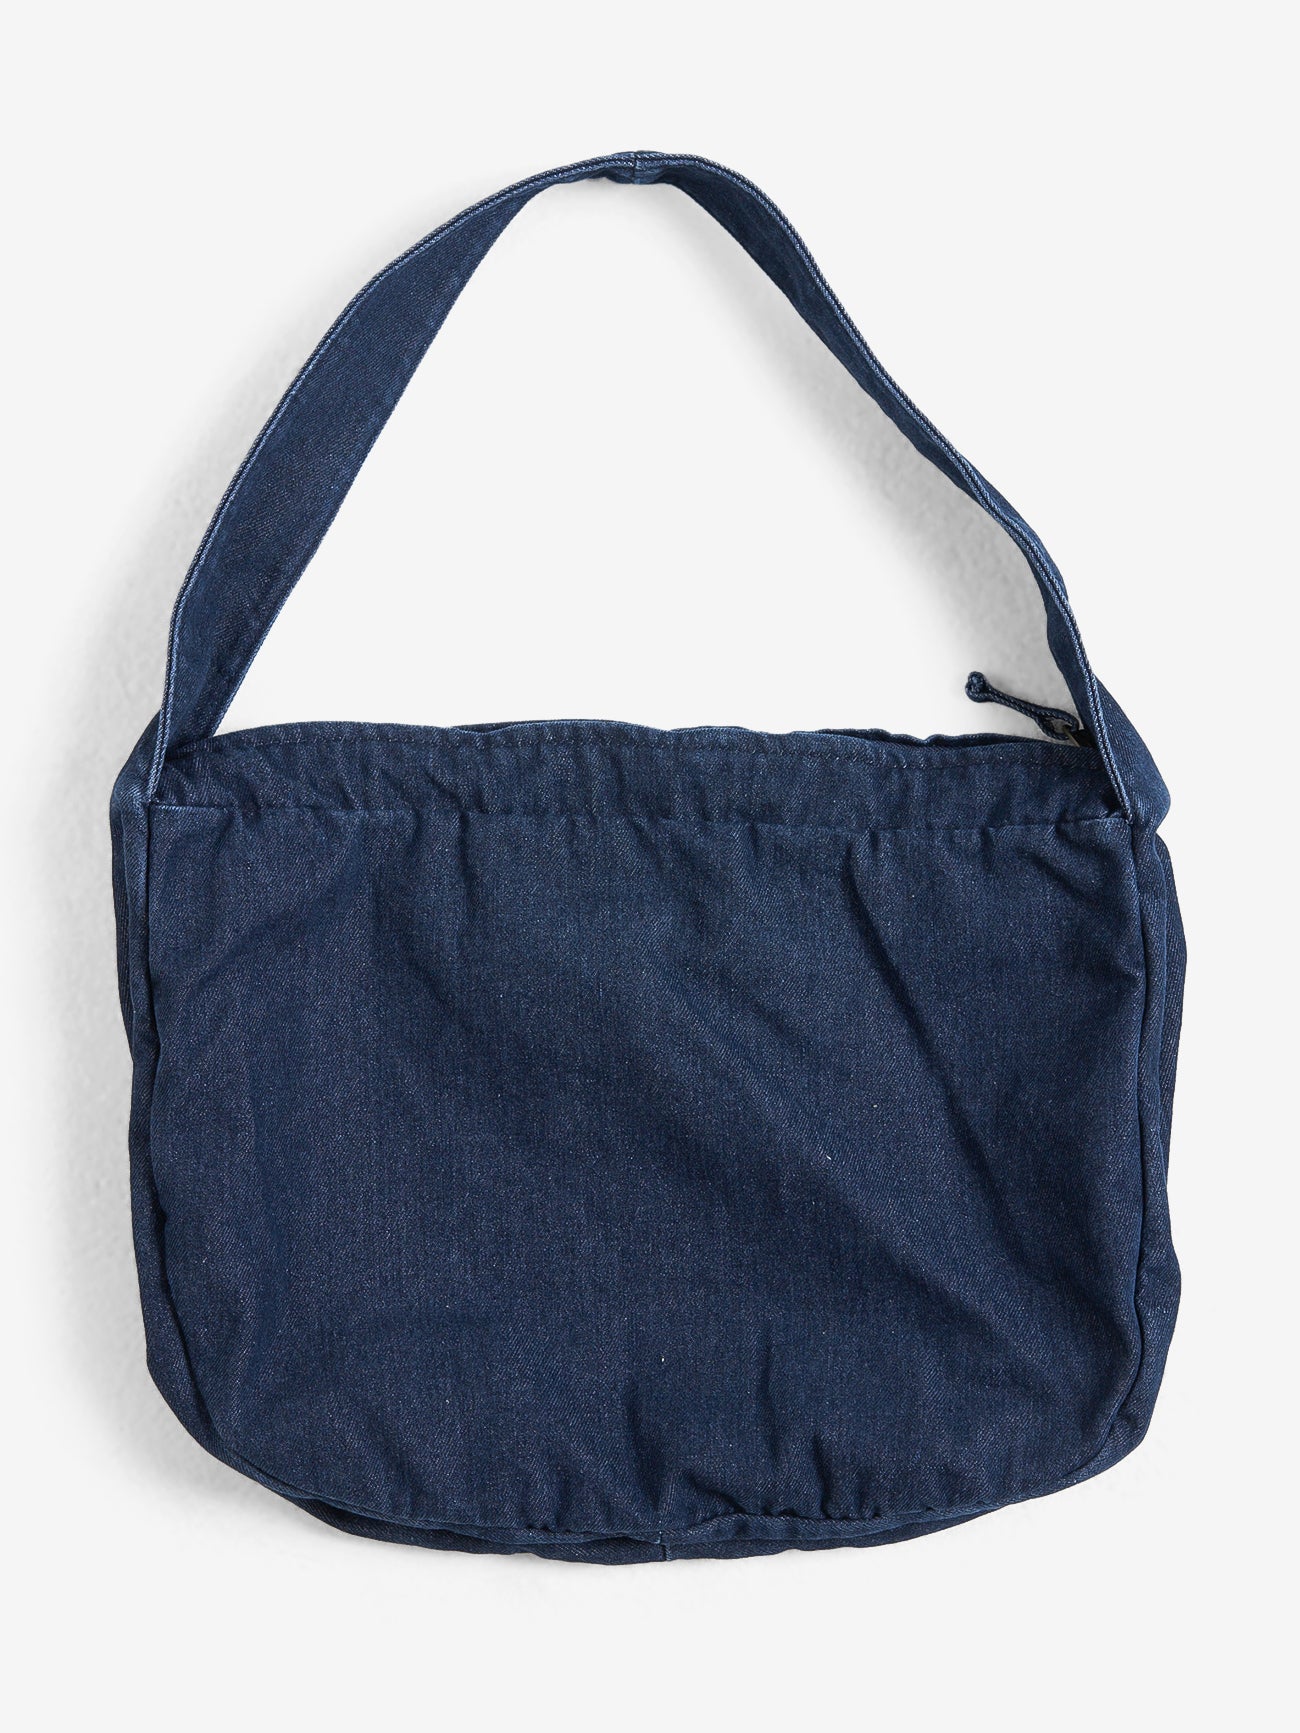 Dana Denim Crescent Bag - Indigo Rinse One Size